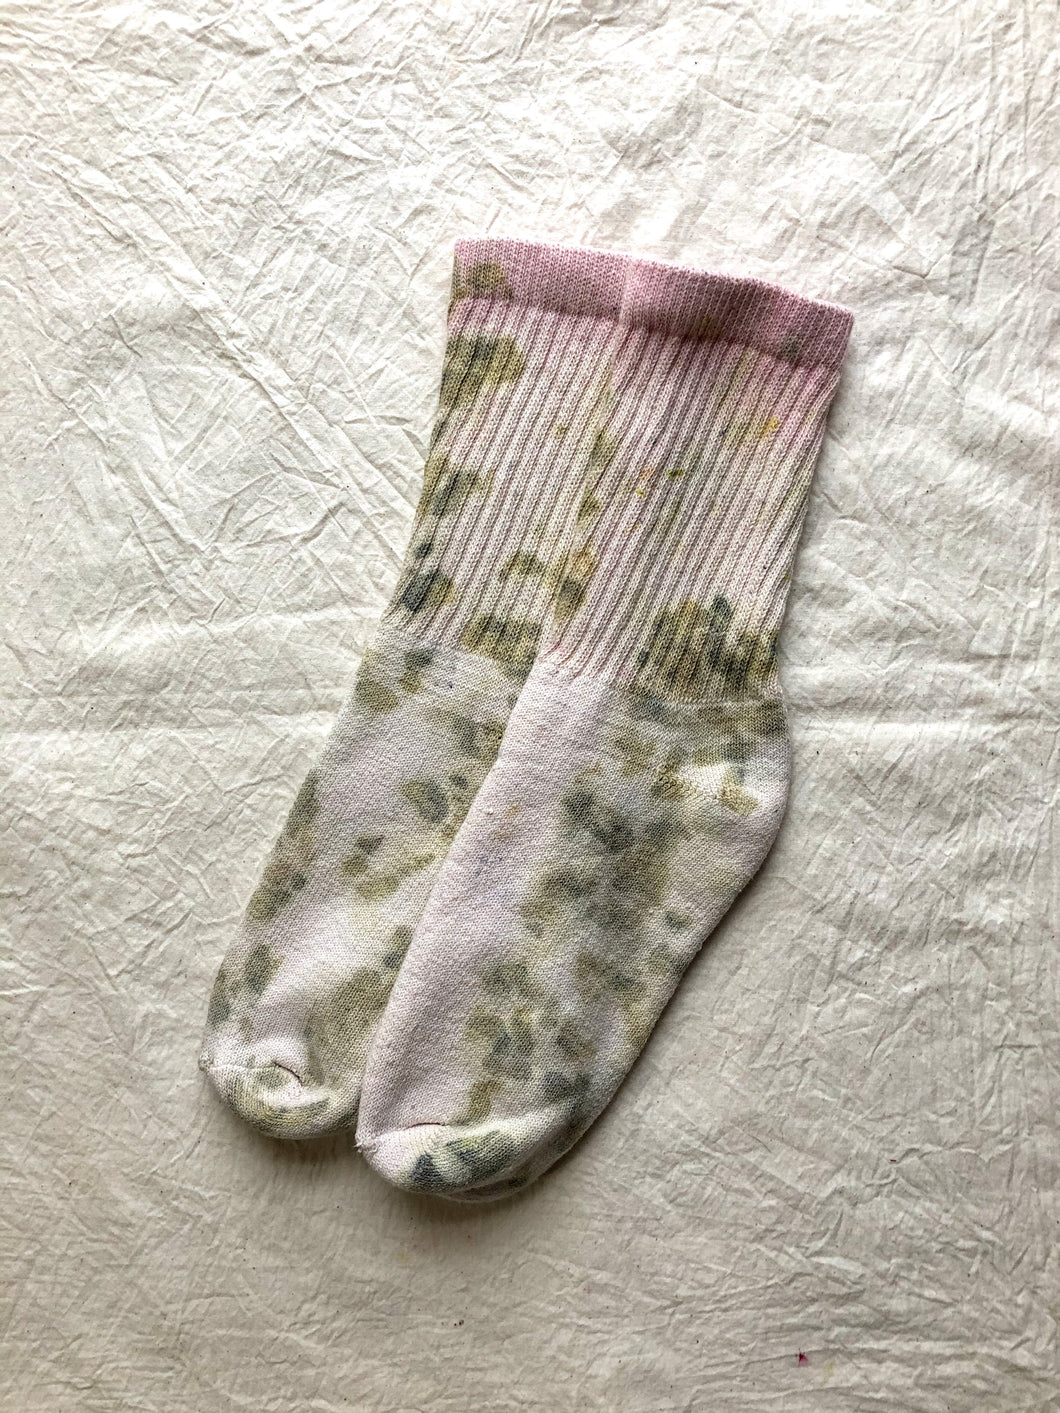 Botanical Dye Organic Cotton Socks - Rose Multi Fade - S